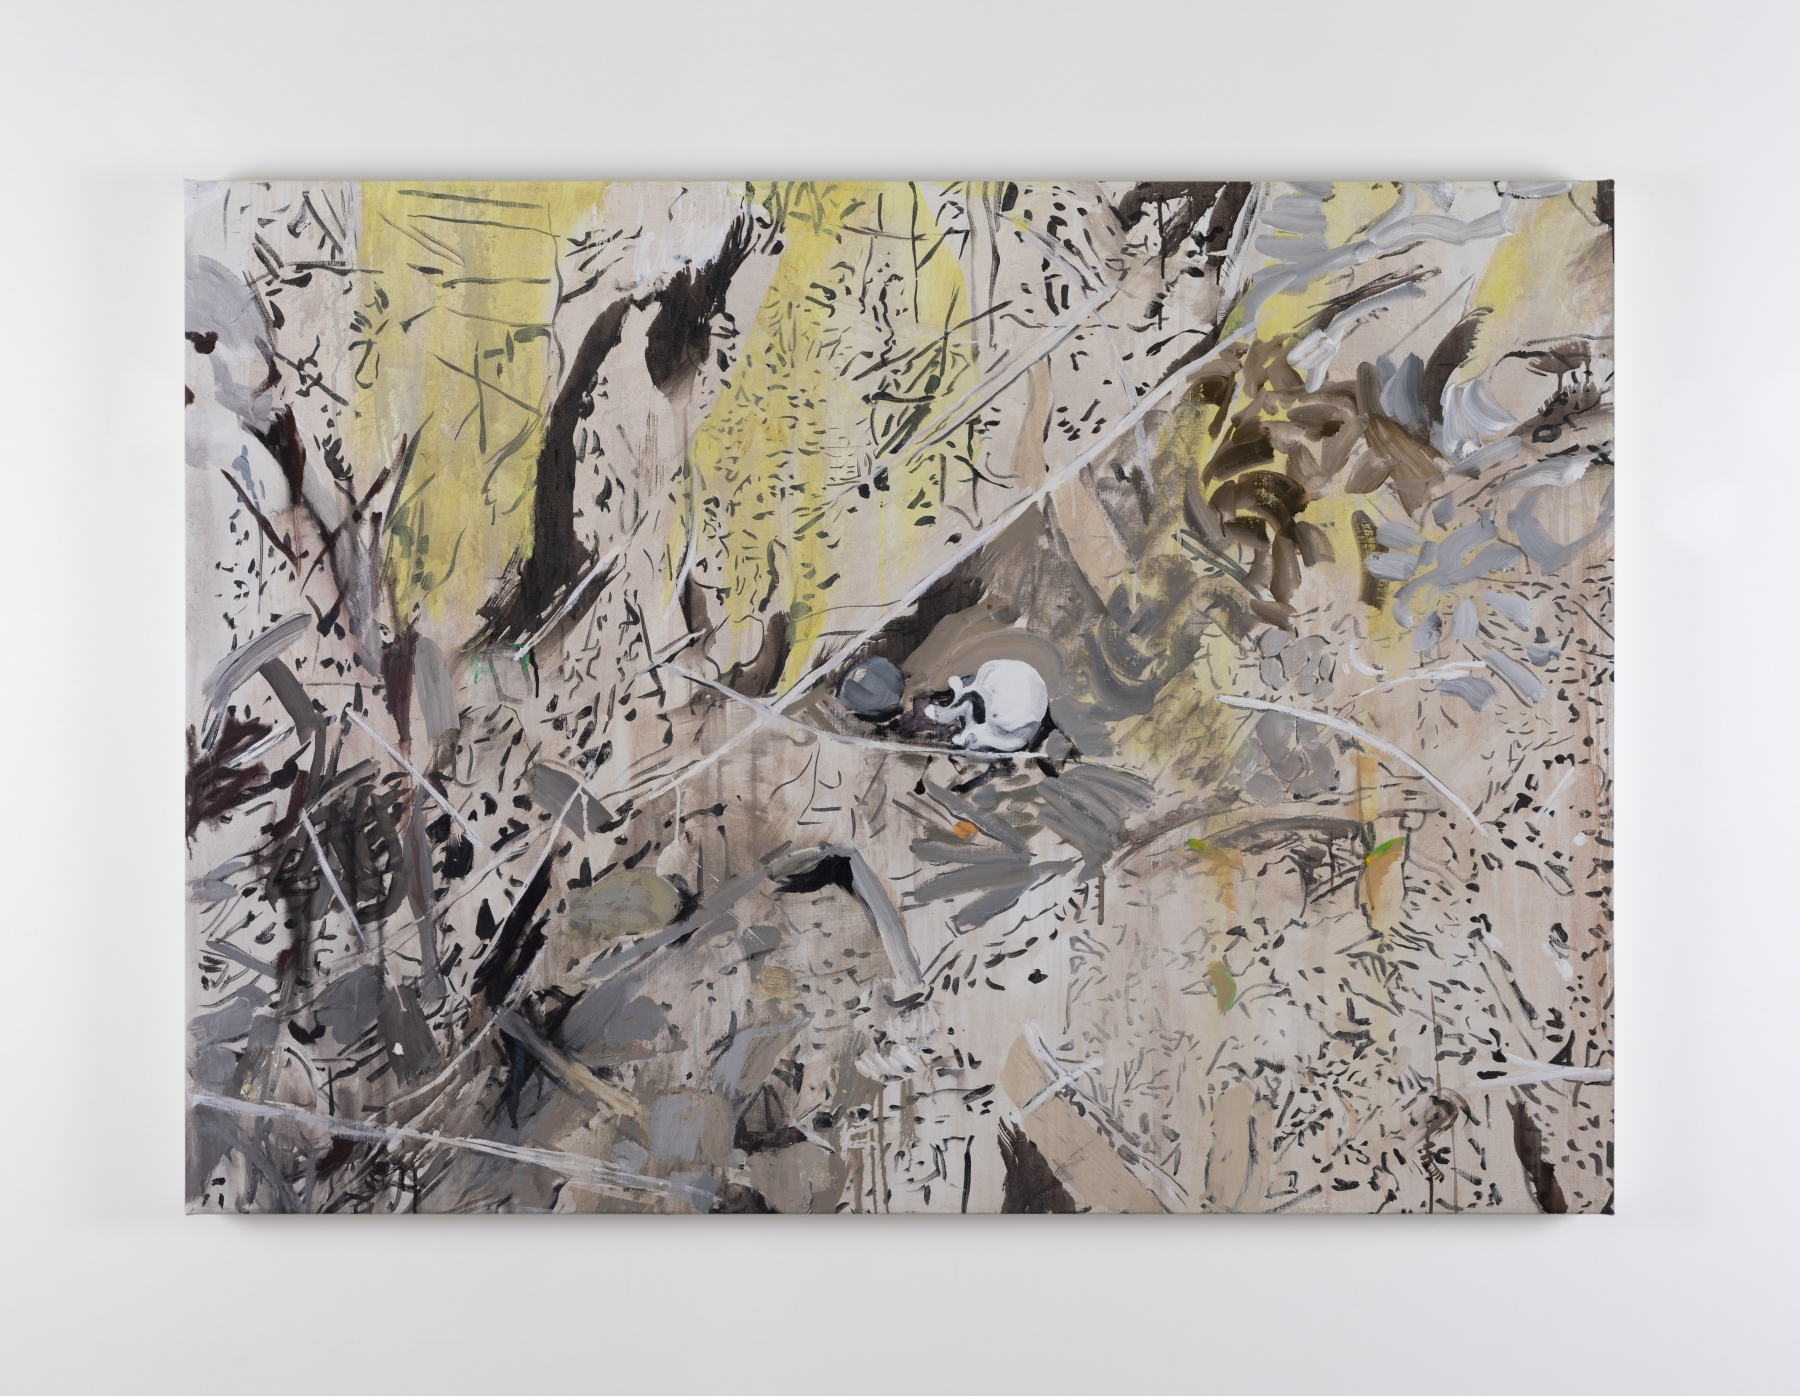 Brian Maguire&nbsp;
Arizona 8 2021
acrylic on canvas
107 x 148 x 2 cm / 42.1 x 58.3 x .8 in&nbsp;